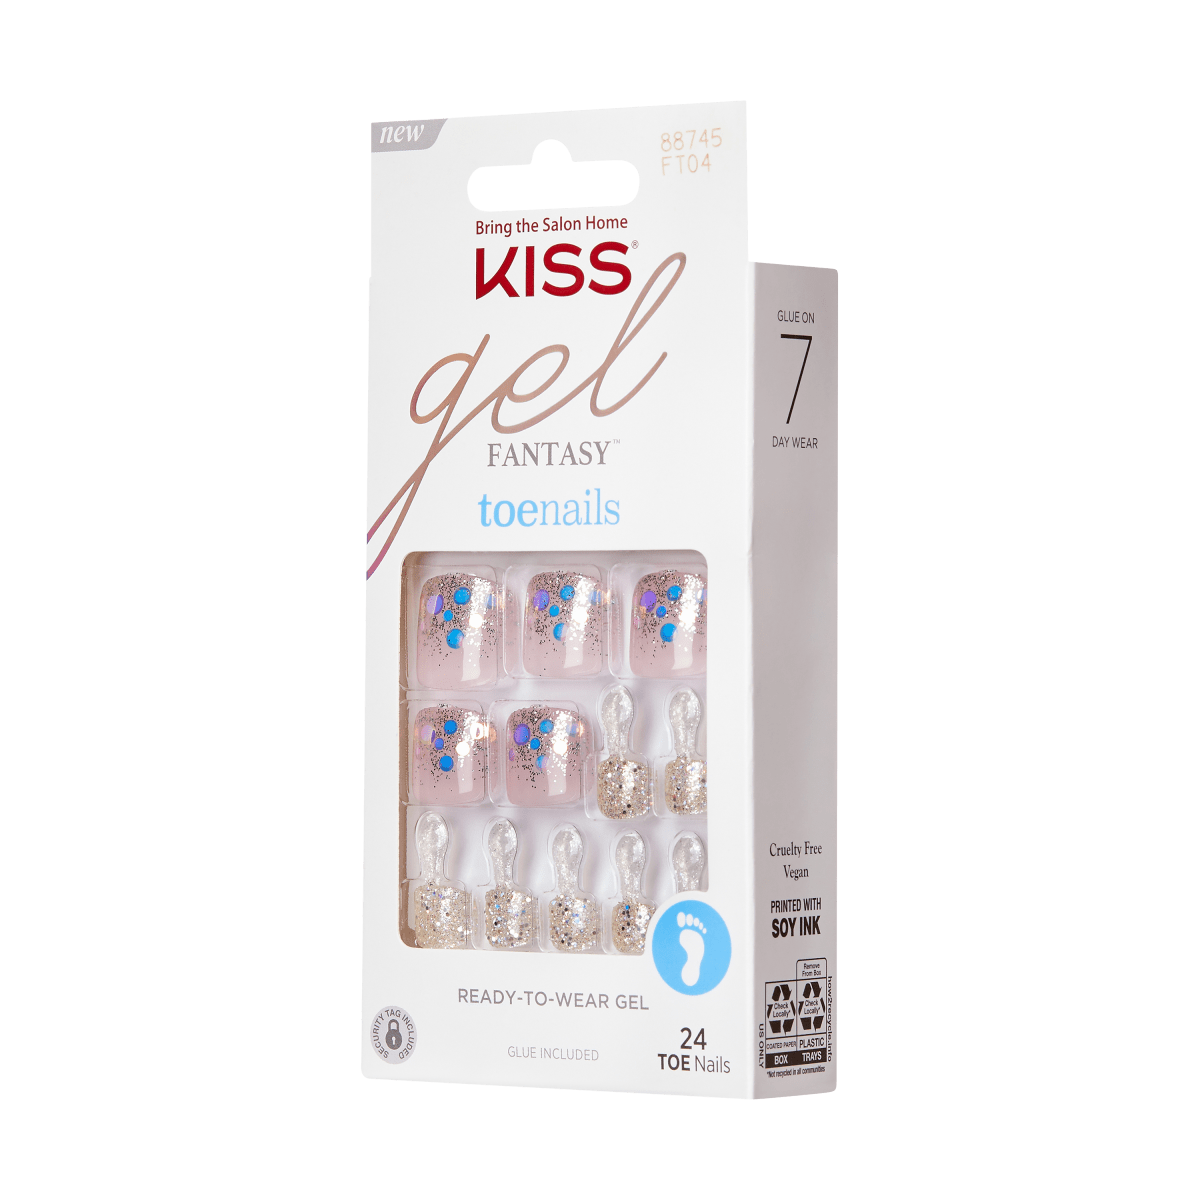 KISS Gel Fantasy Toenails - Wishing Well